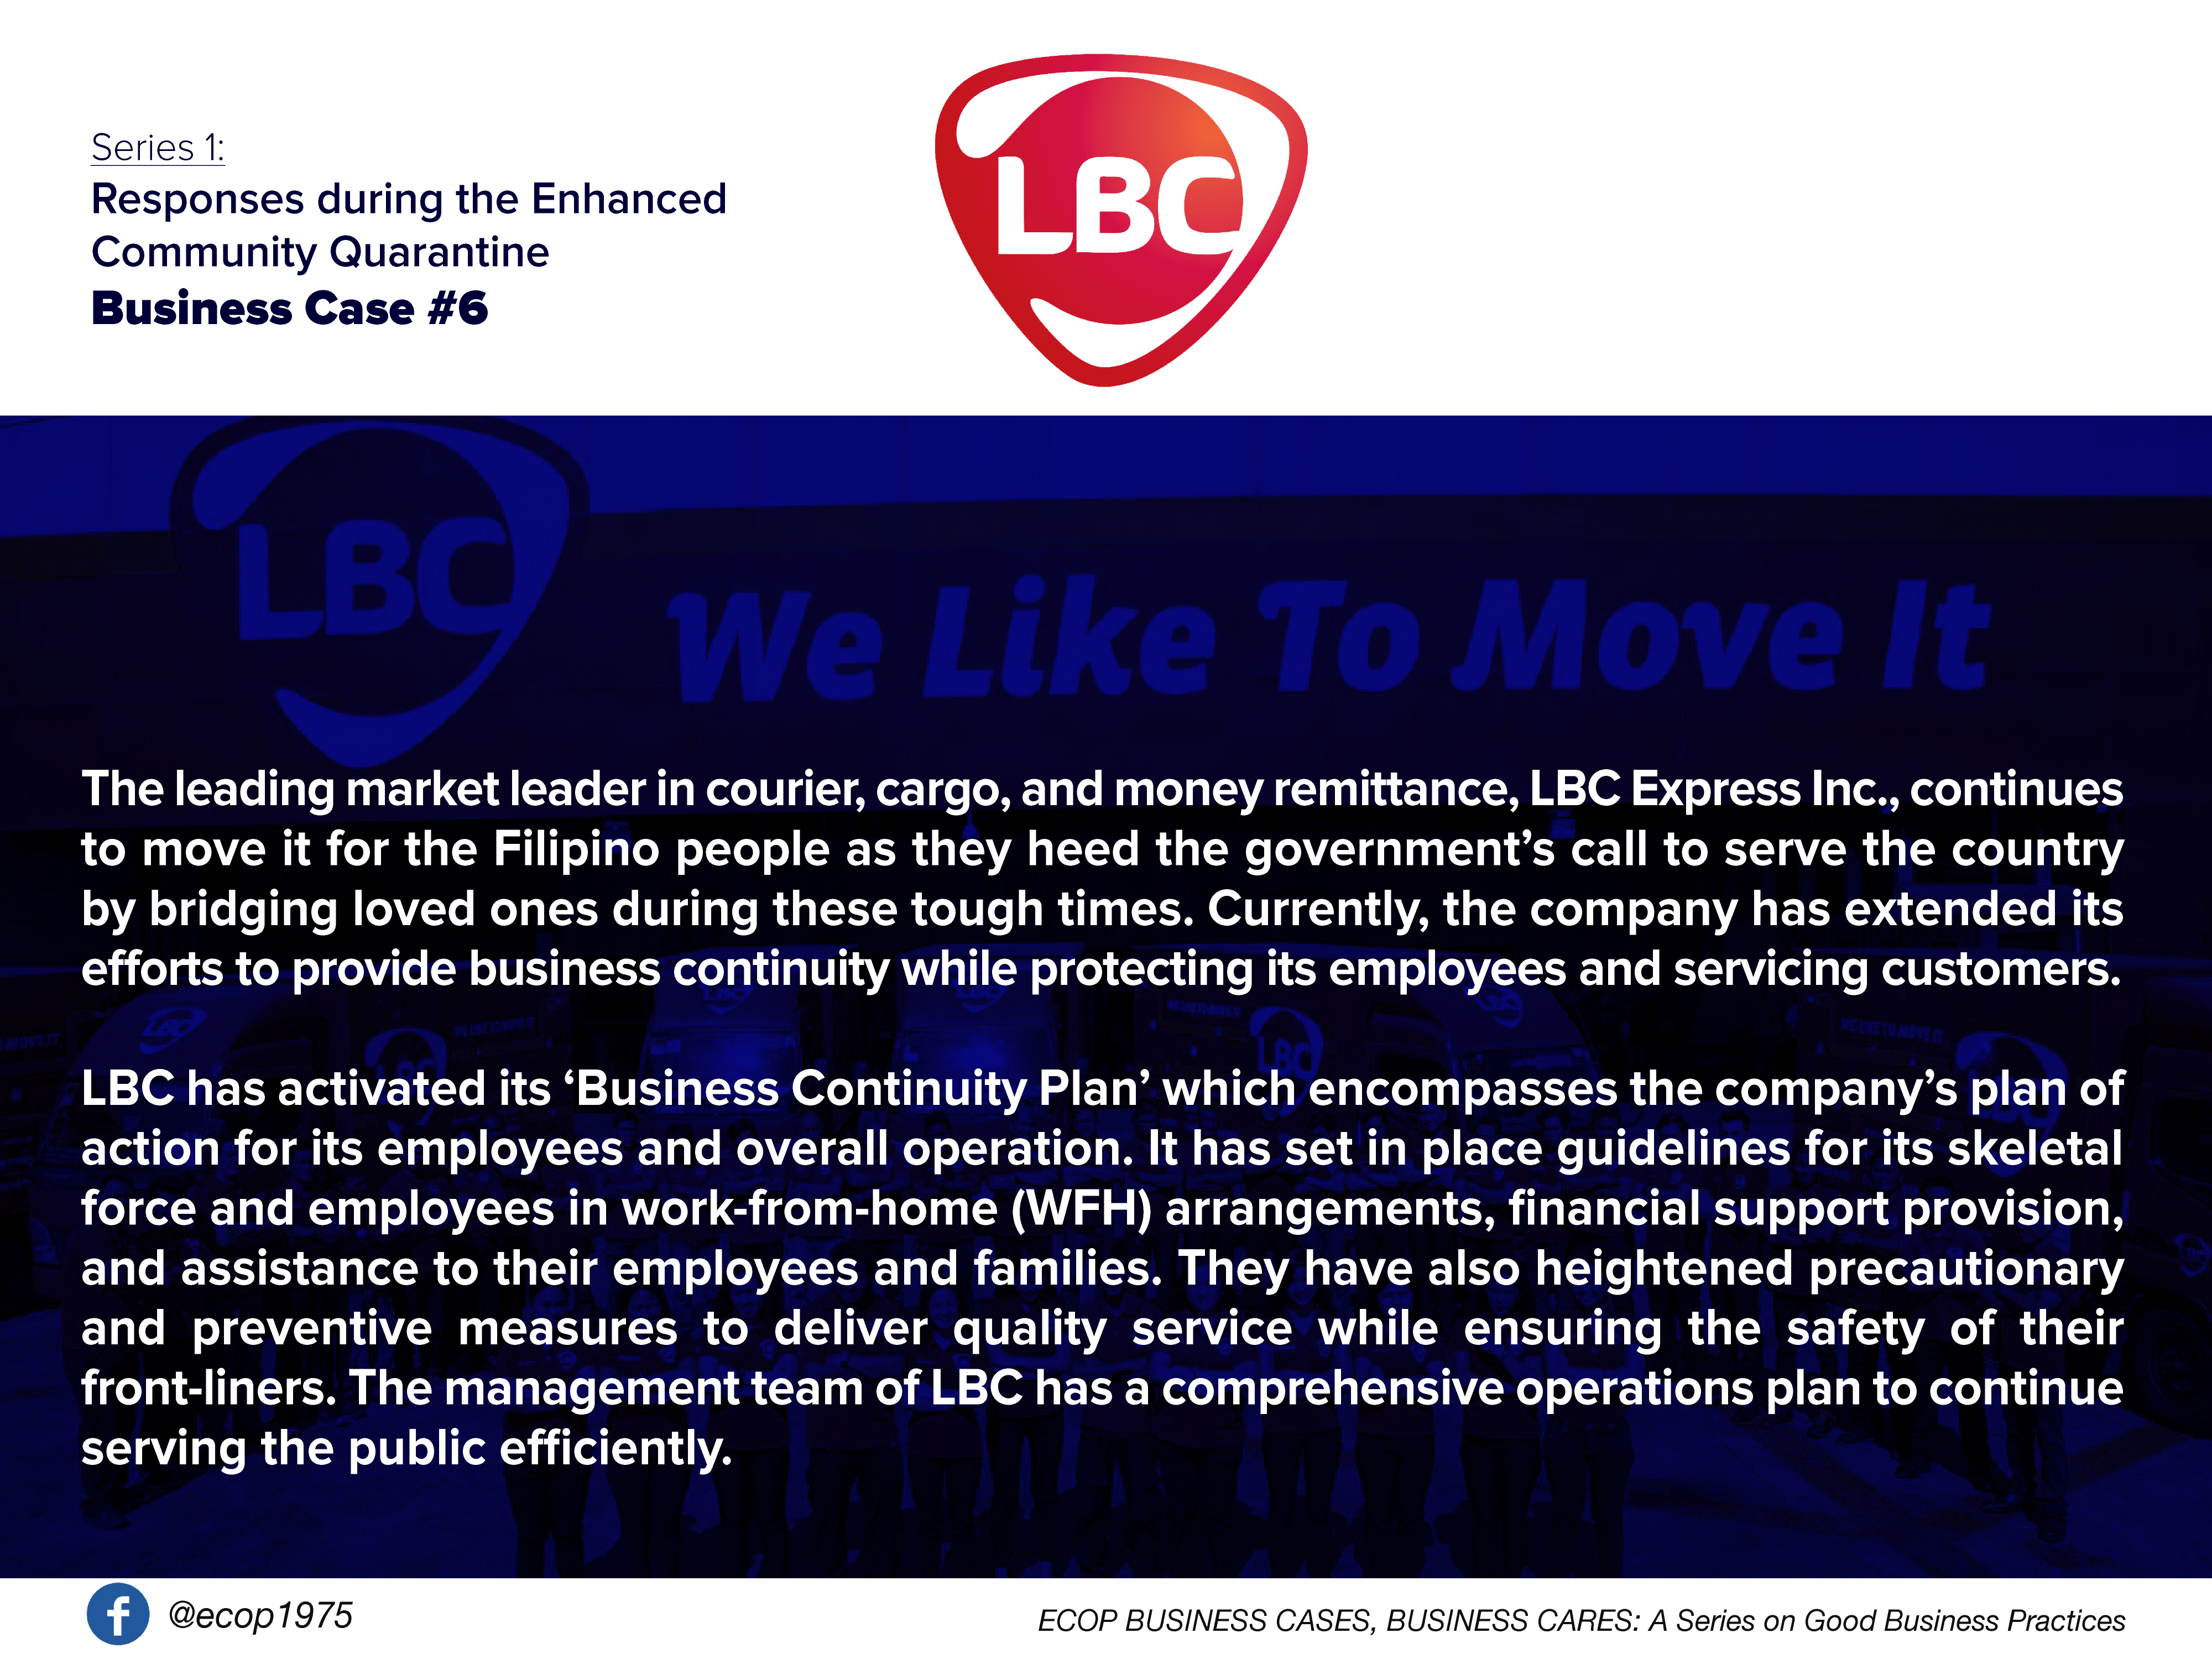 01-LBC Express, Inc. amid the COVID-19 crisis